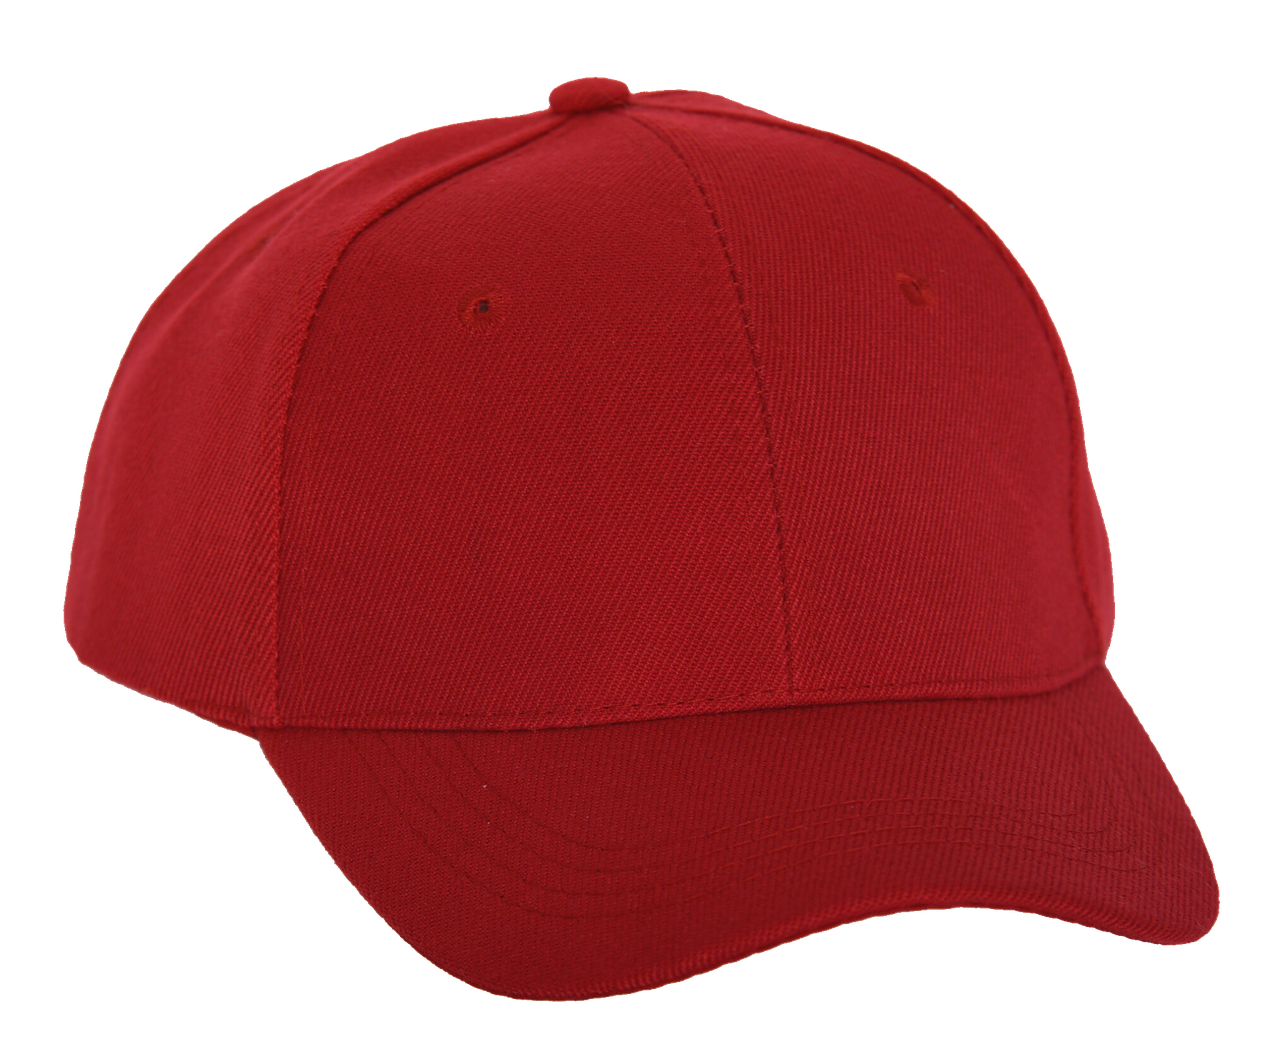 hat, head, red-2525910.jpg